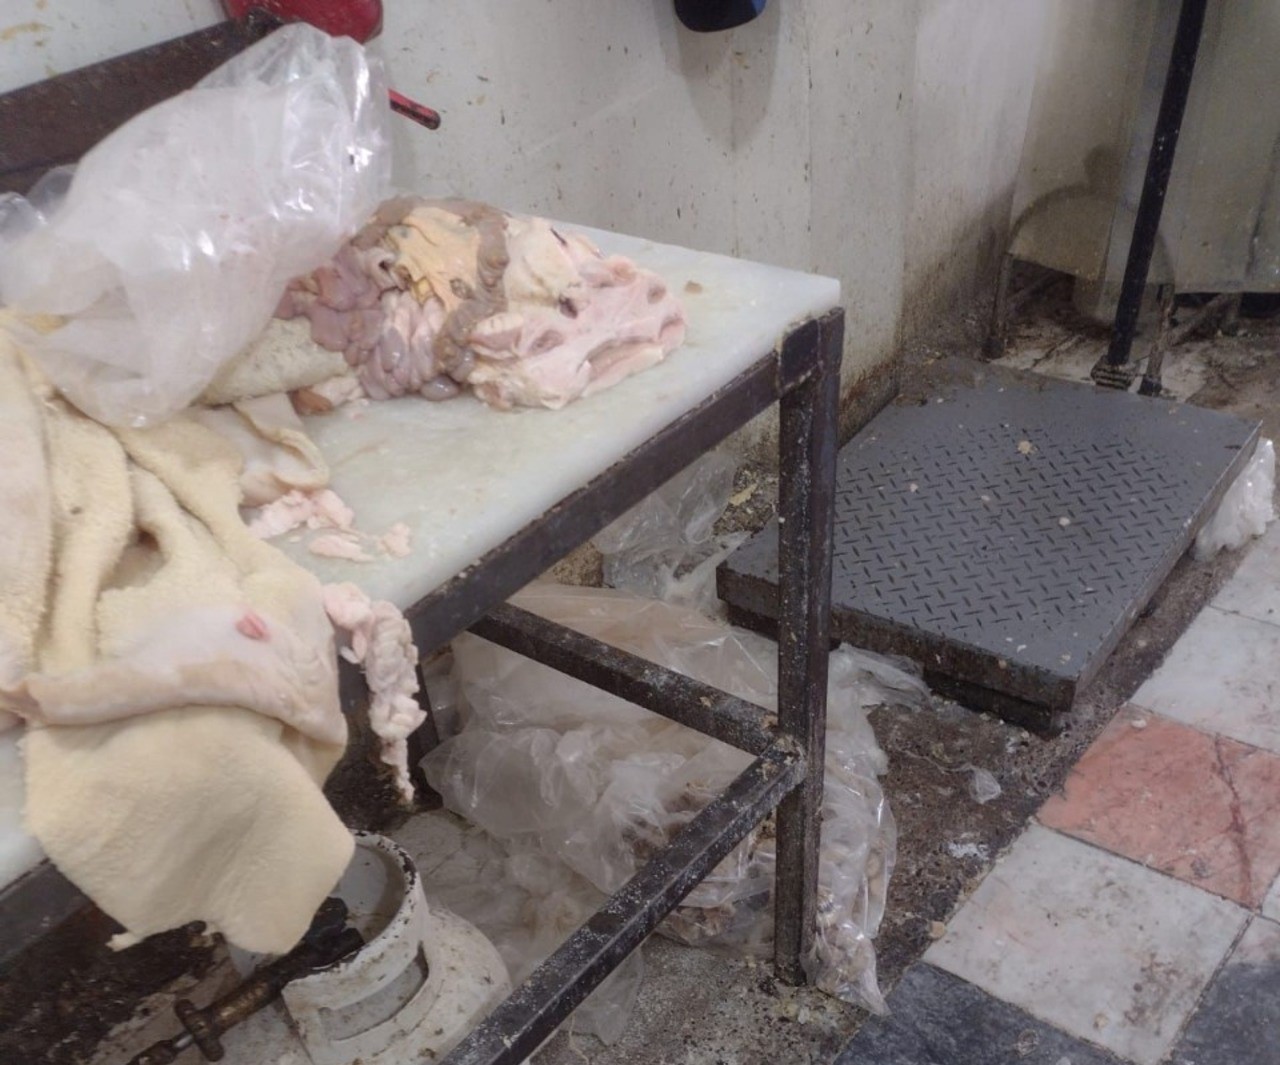 Suman 3 carnicerías de Torreón clausuradas esta semana por tener condiciones insalubres.